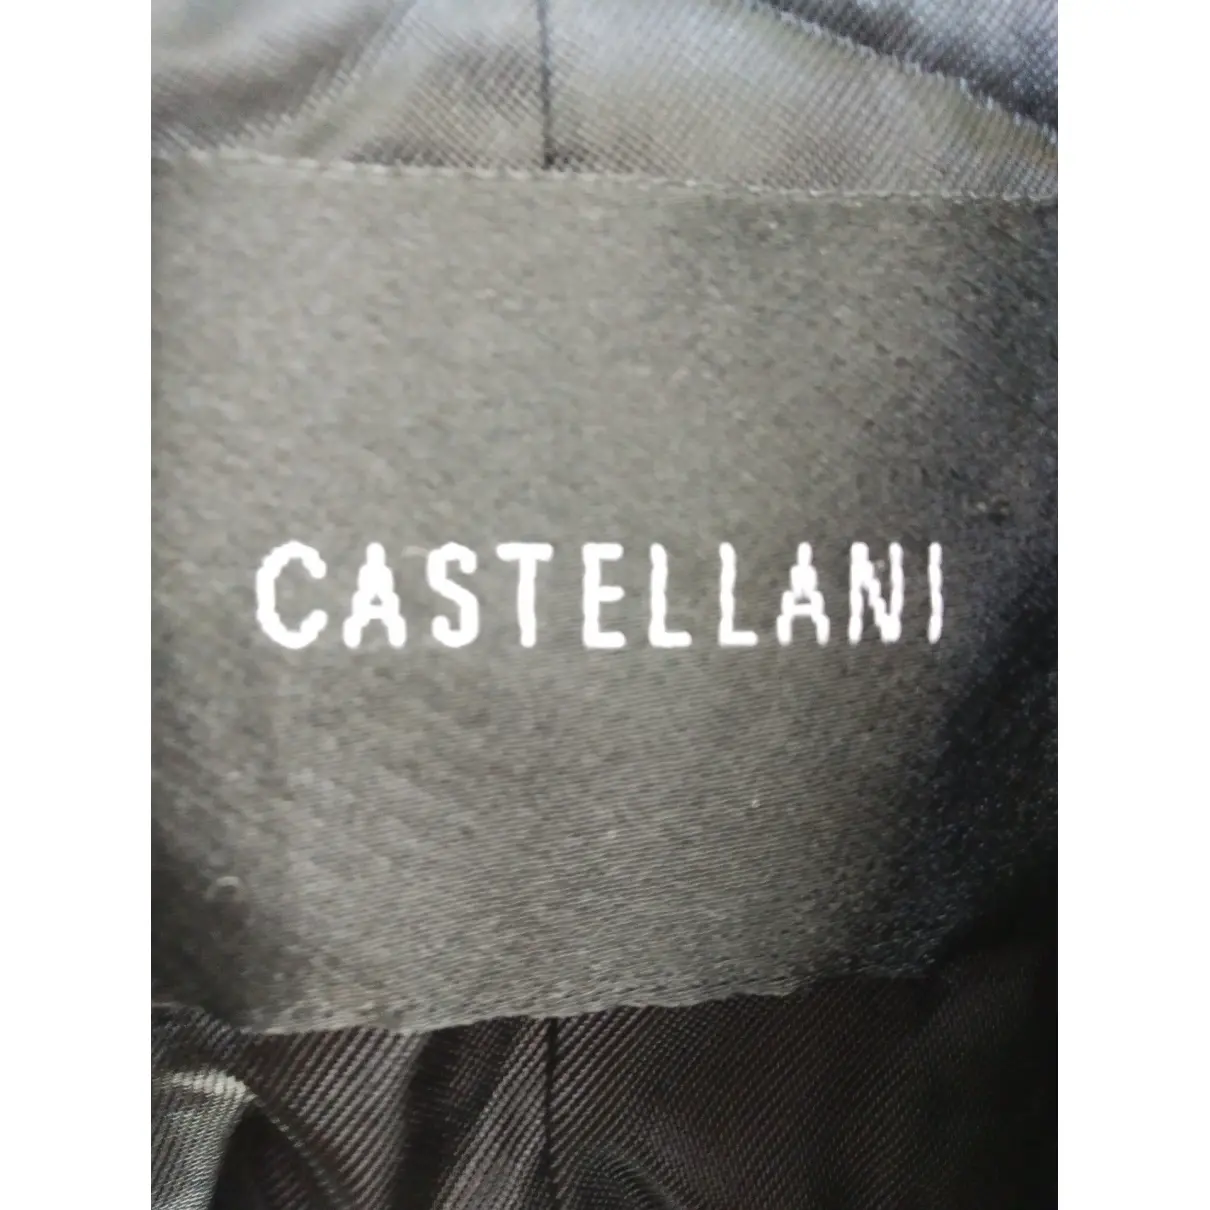 Buy Flavio Castellani Velvet blazer online